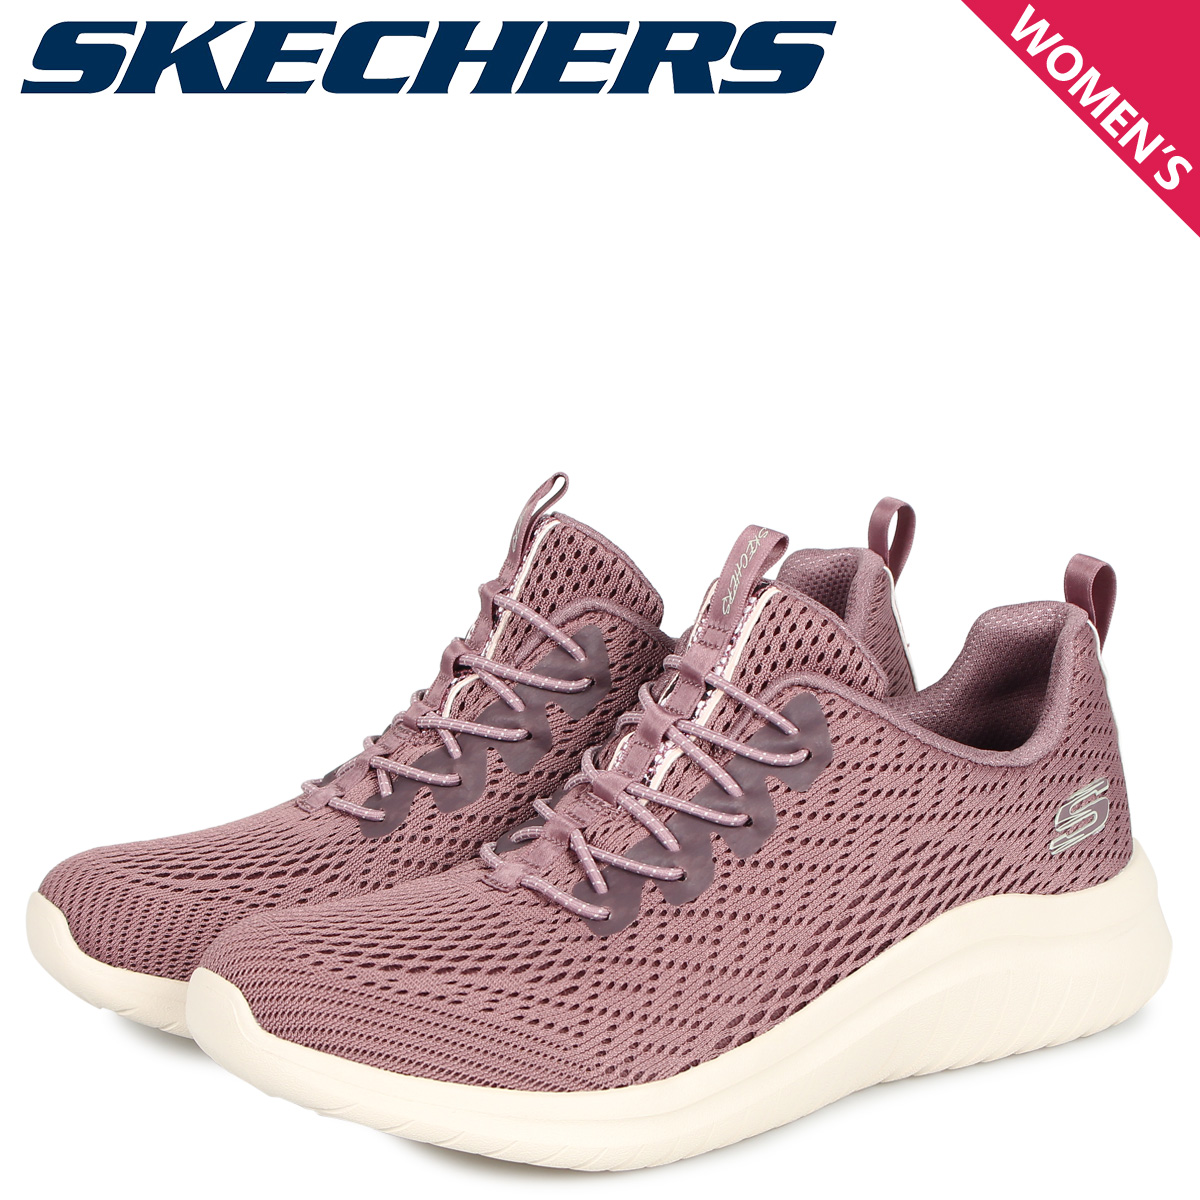 skechers shoes online